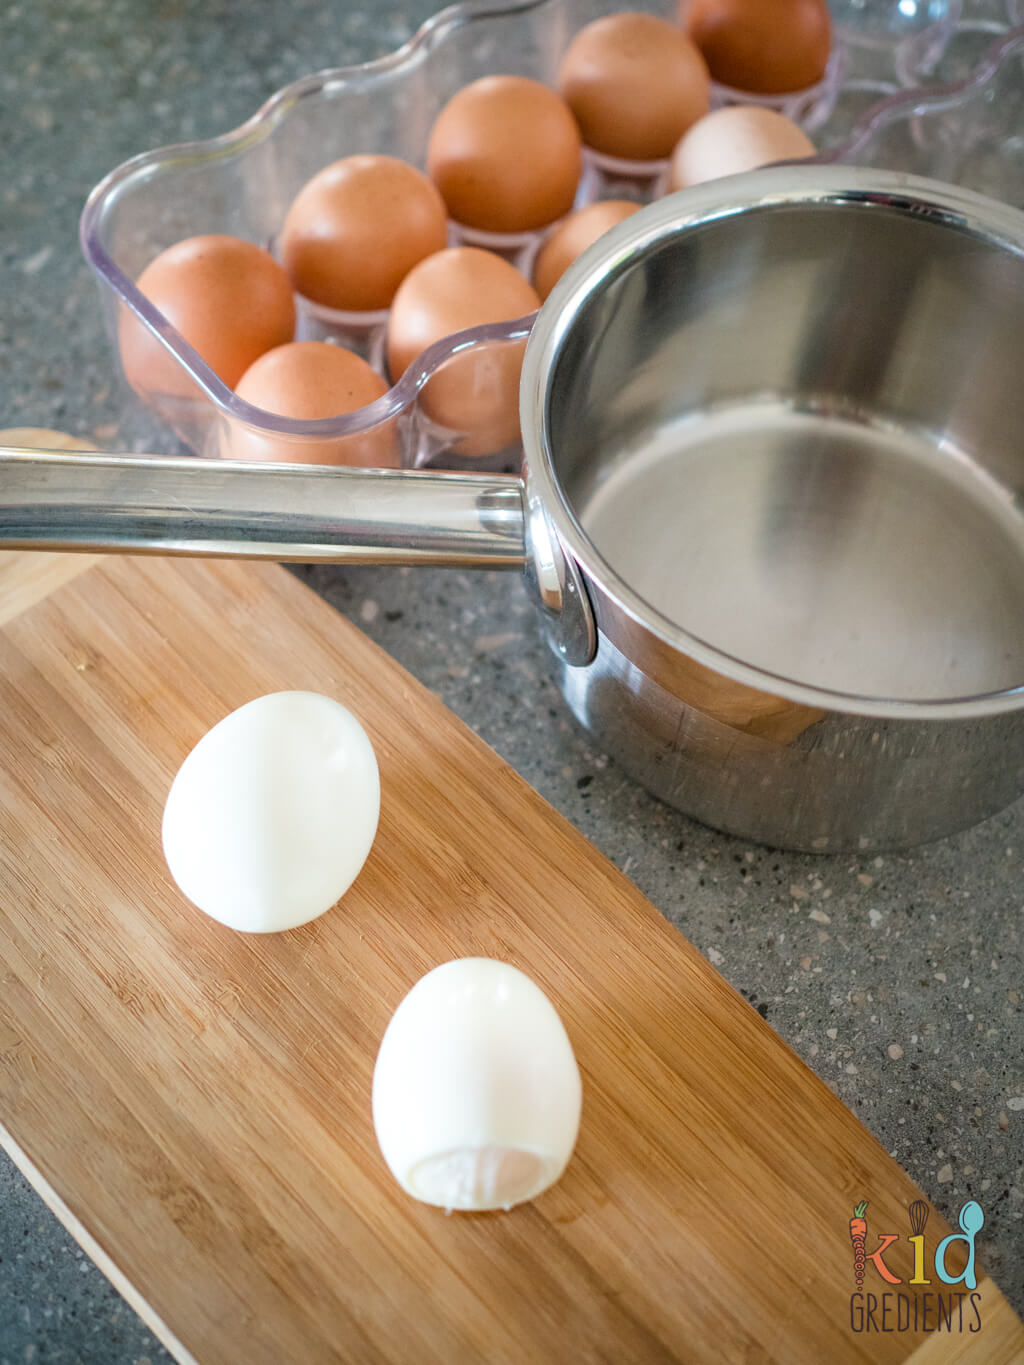 uncut hard boiled eggs